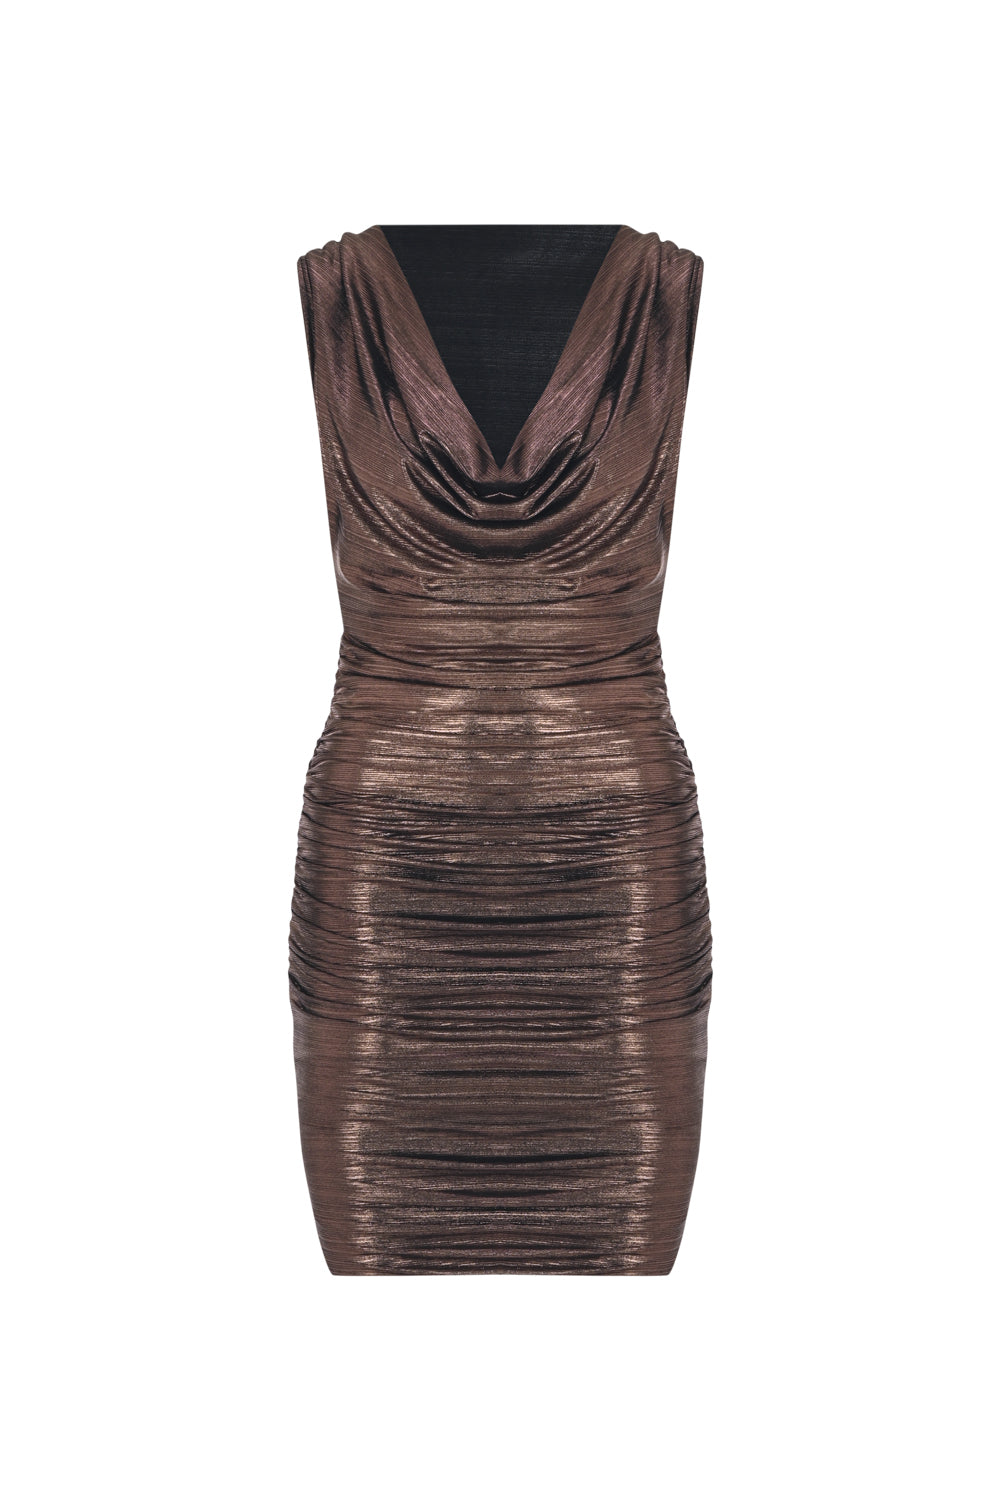 Cowl Neck Metallic Mini Dress - Copper